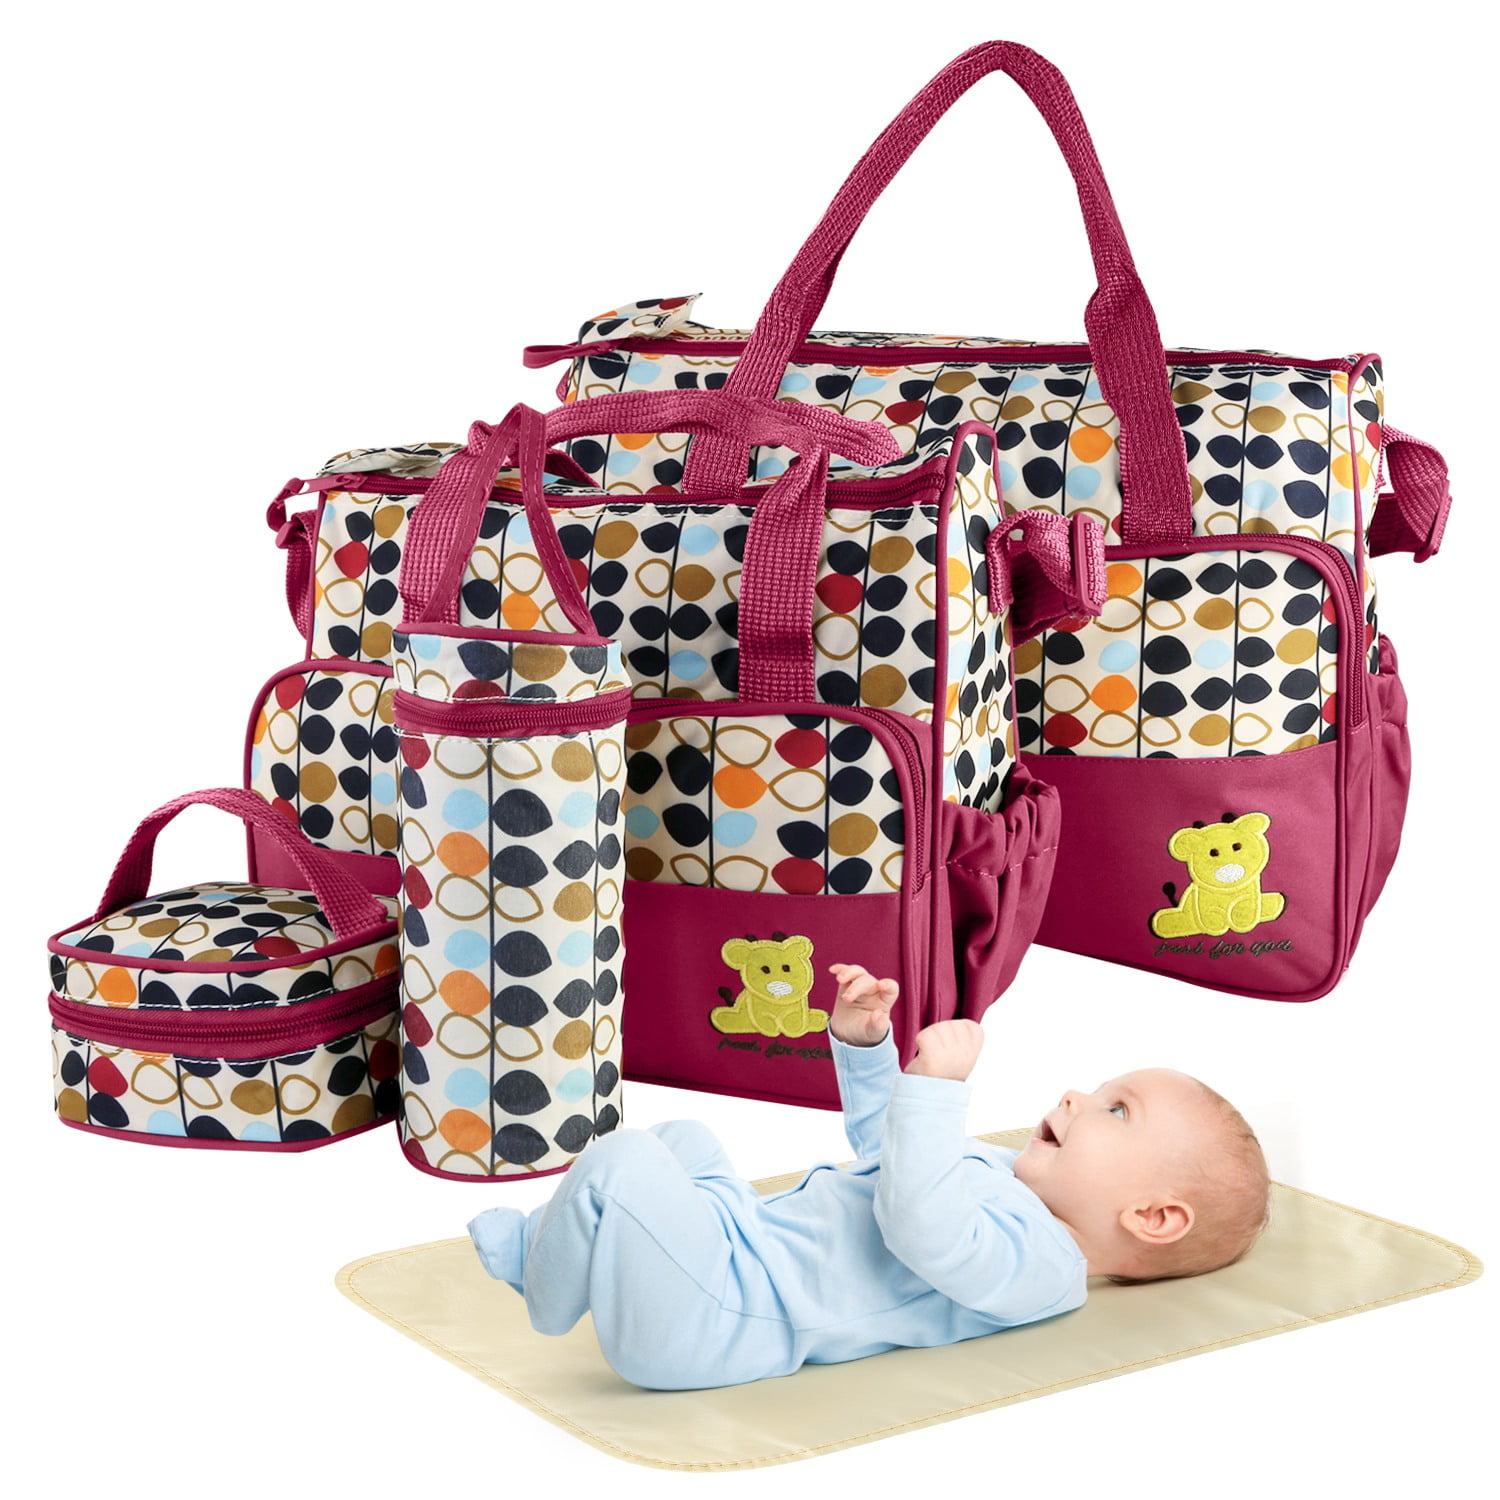 5pcs Baby Diaper Bag Baby Bag Baby Care Set Baby Care